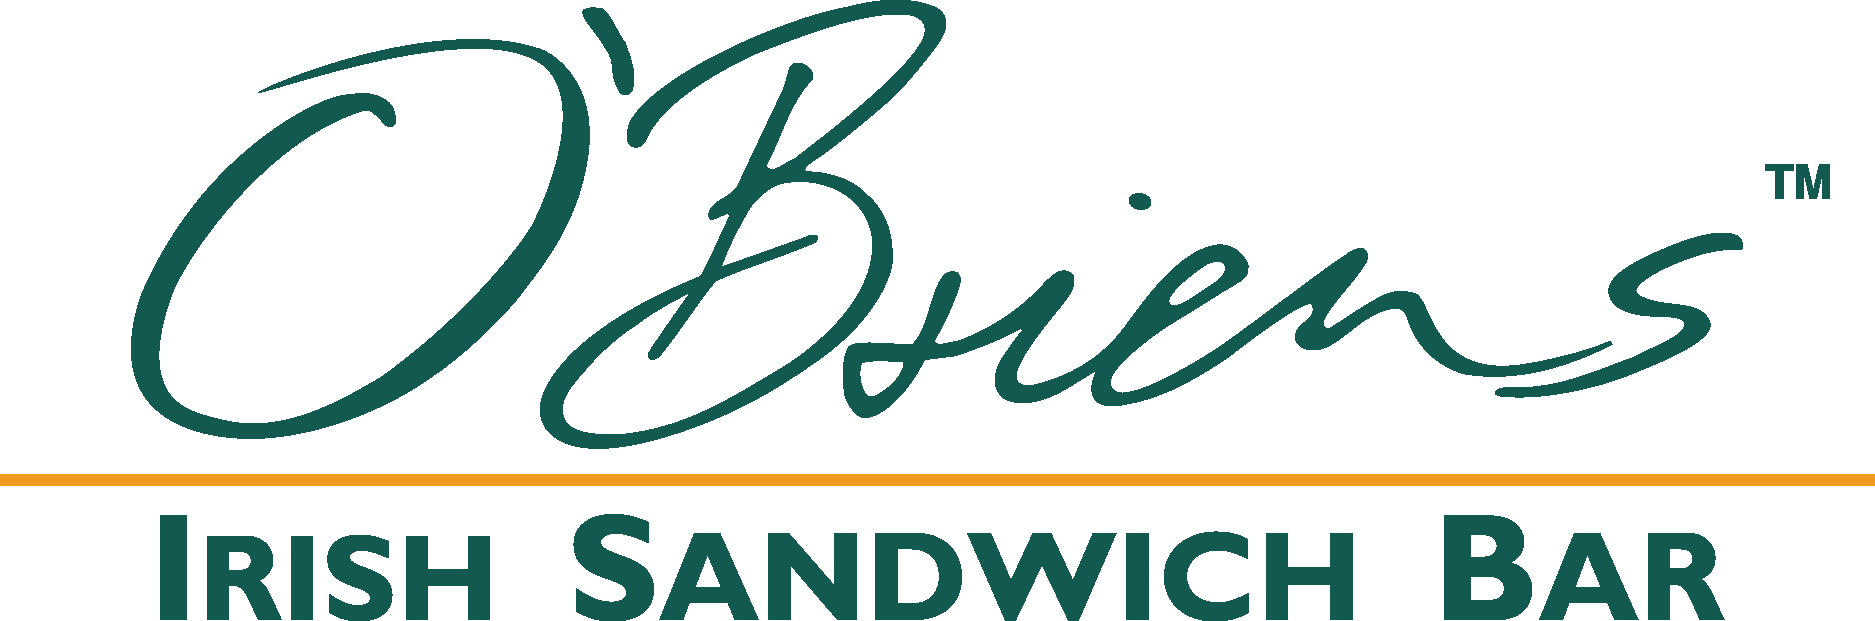 O’Briens Irish Sandwich Bar Logo Vector